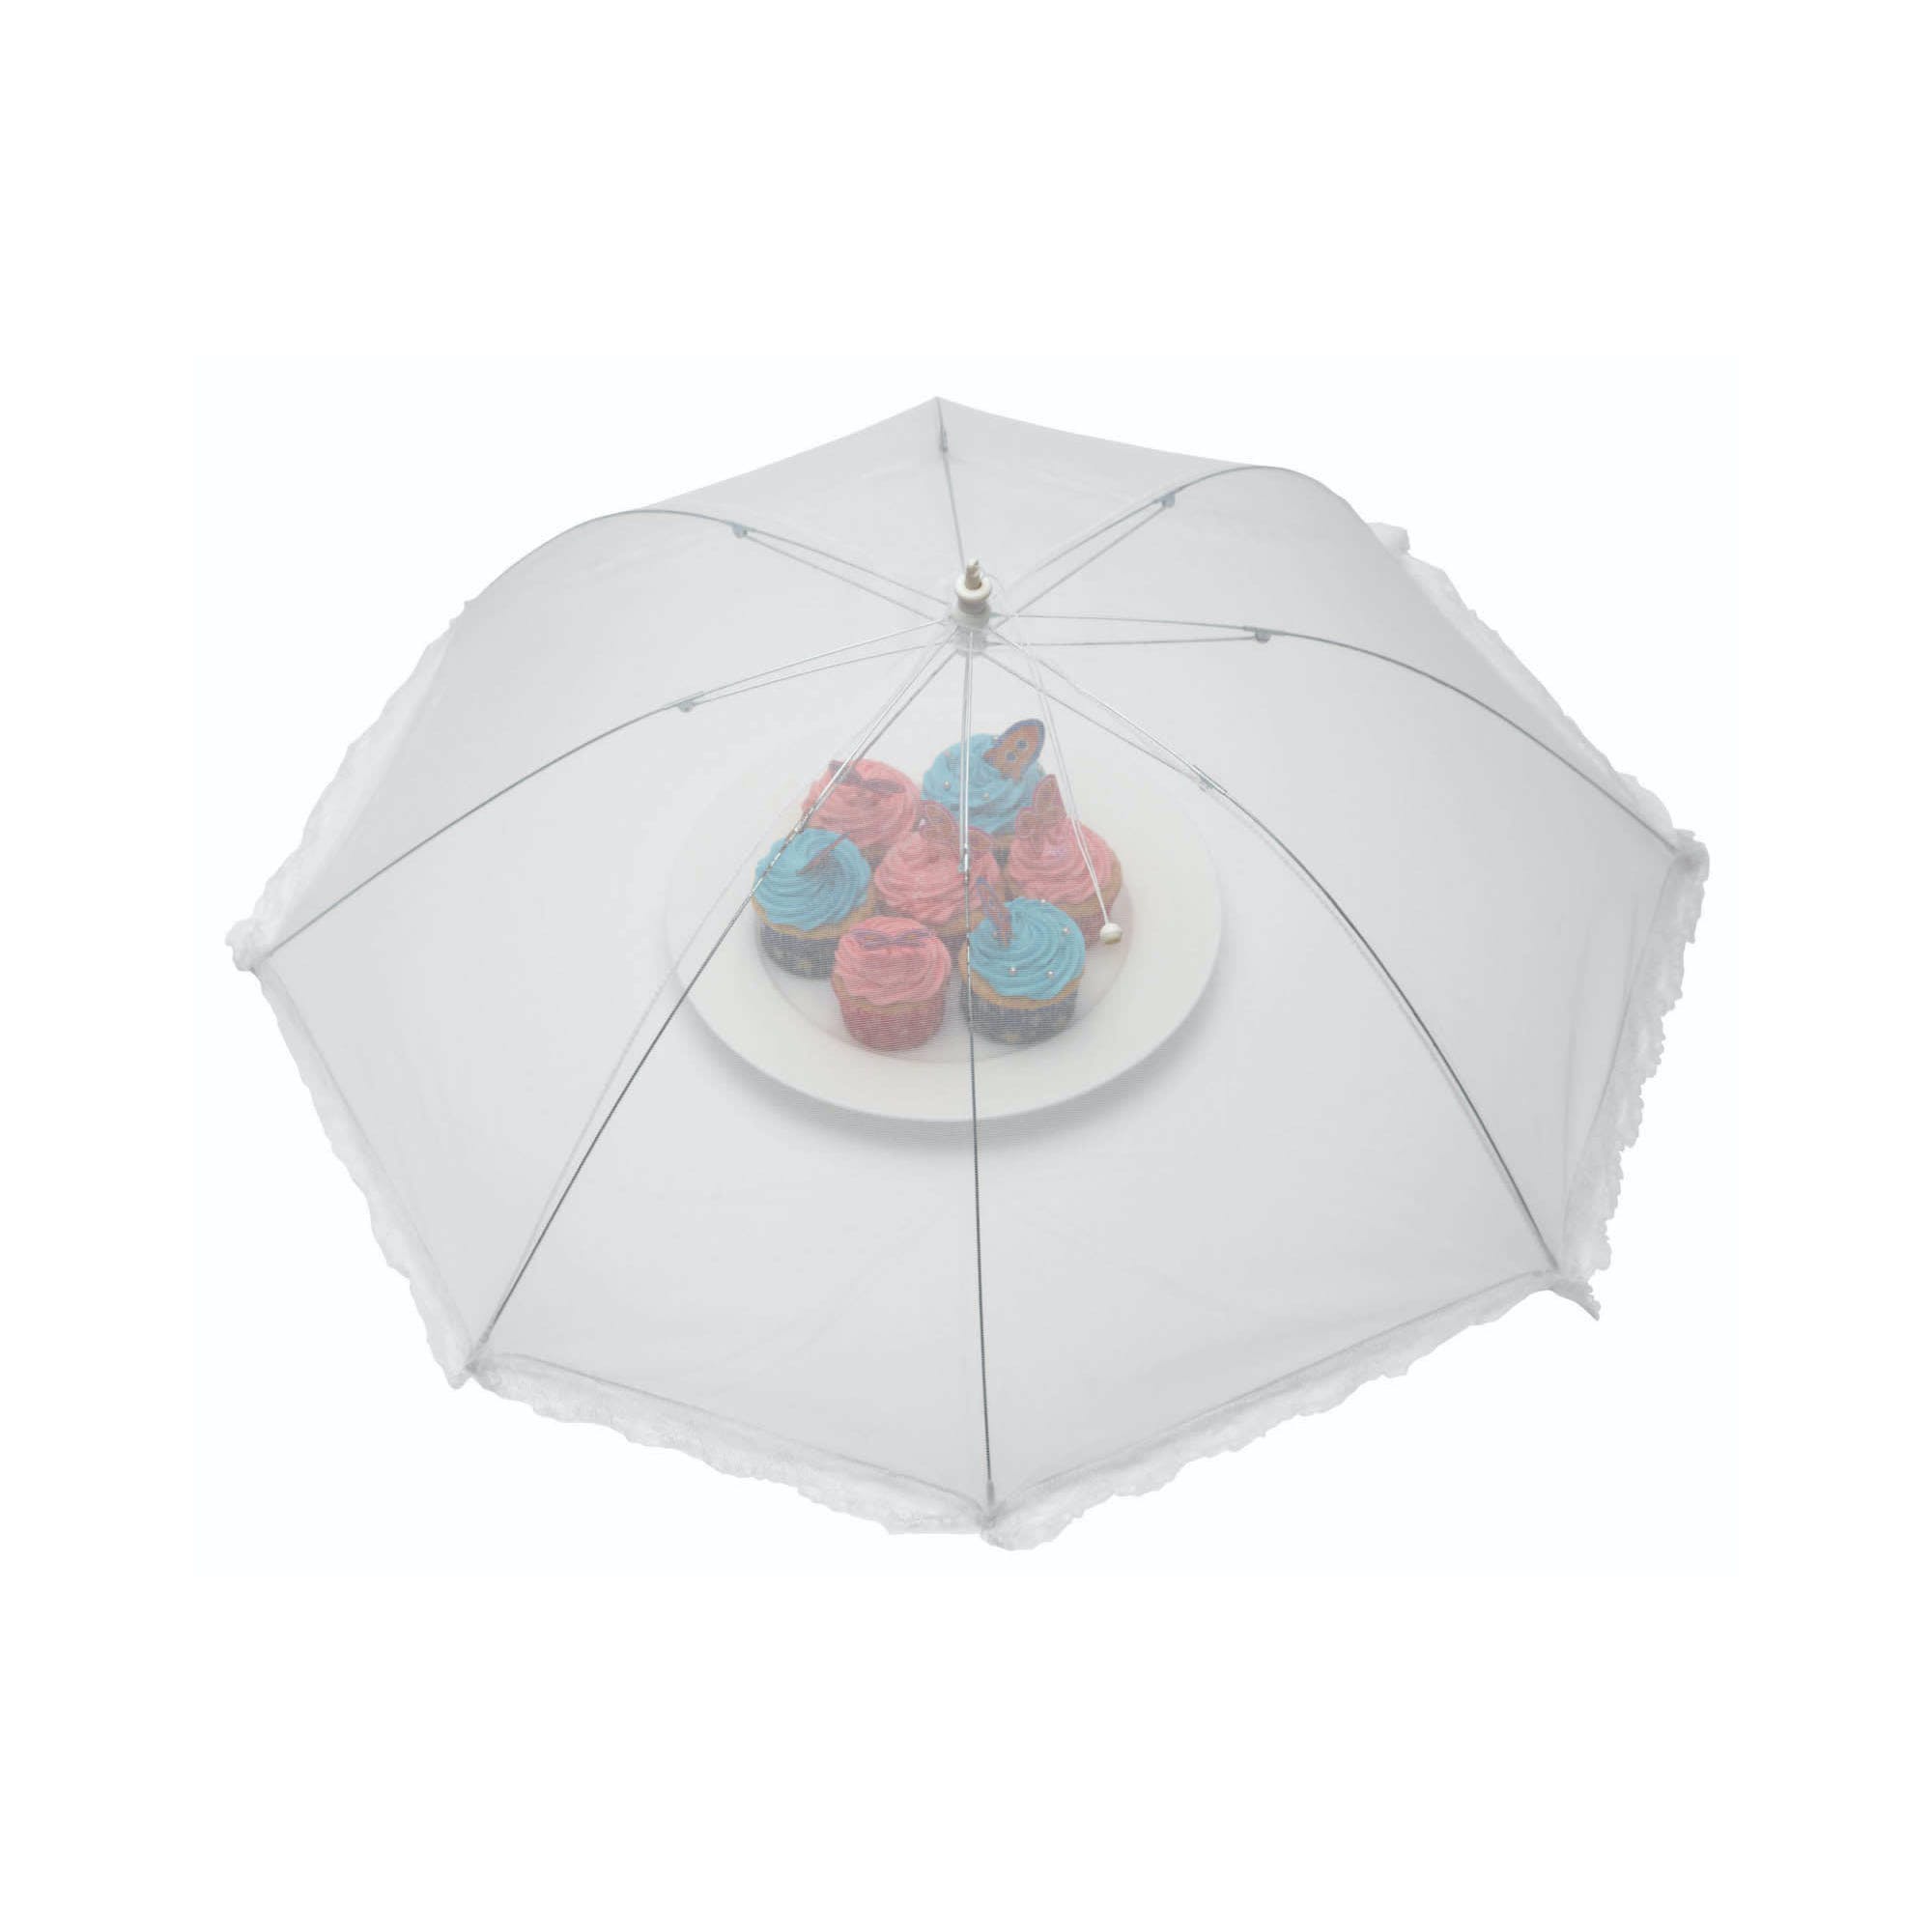 KitchenCraft 76cm White Umbrella Food Cover - The Cooks Cupboard Ltd